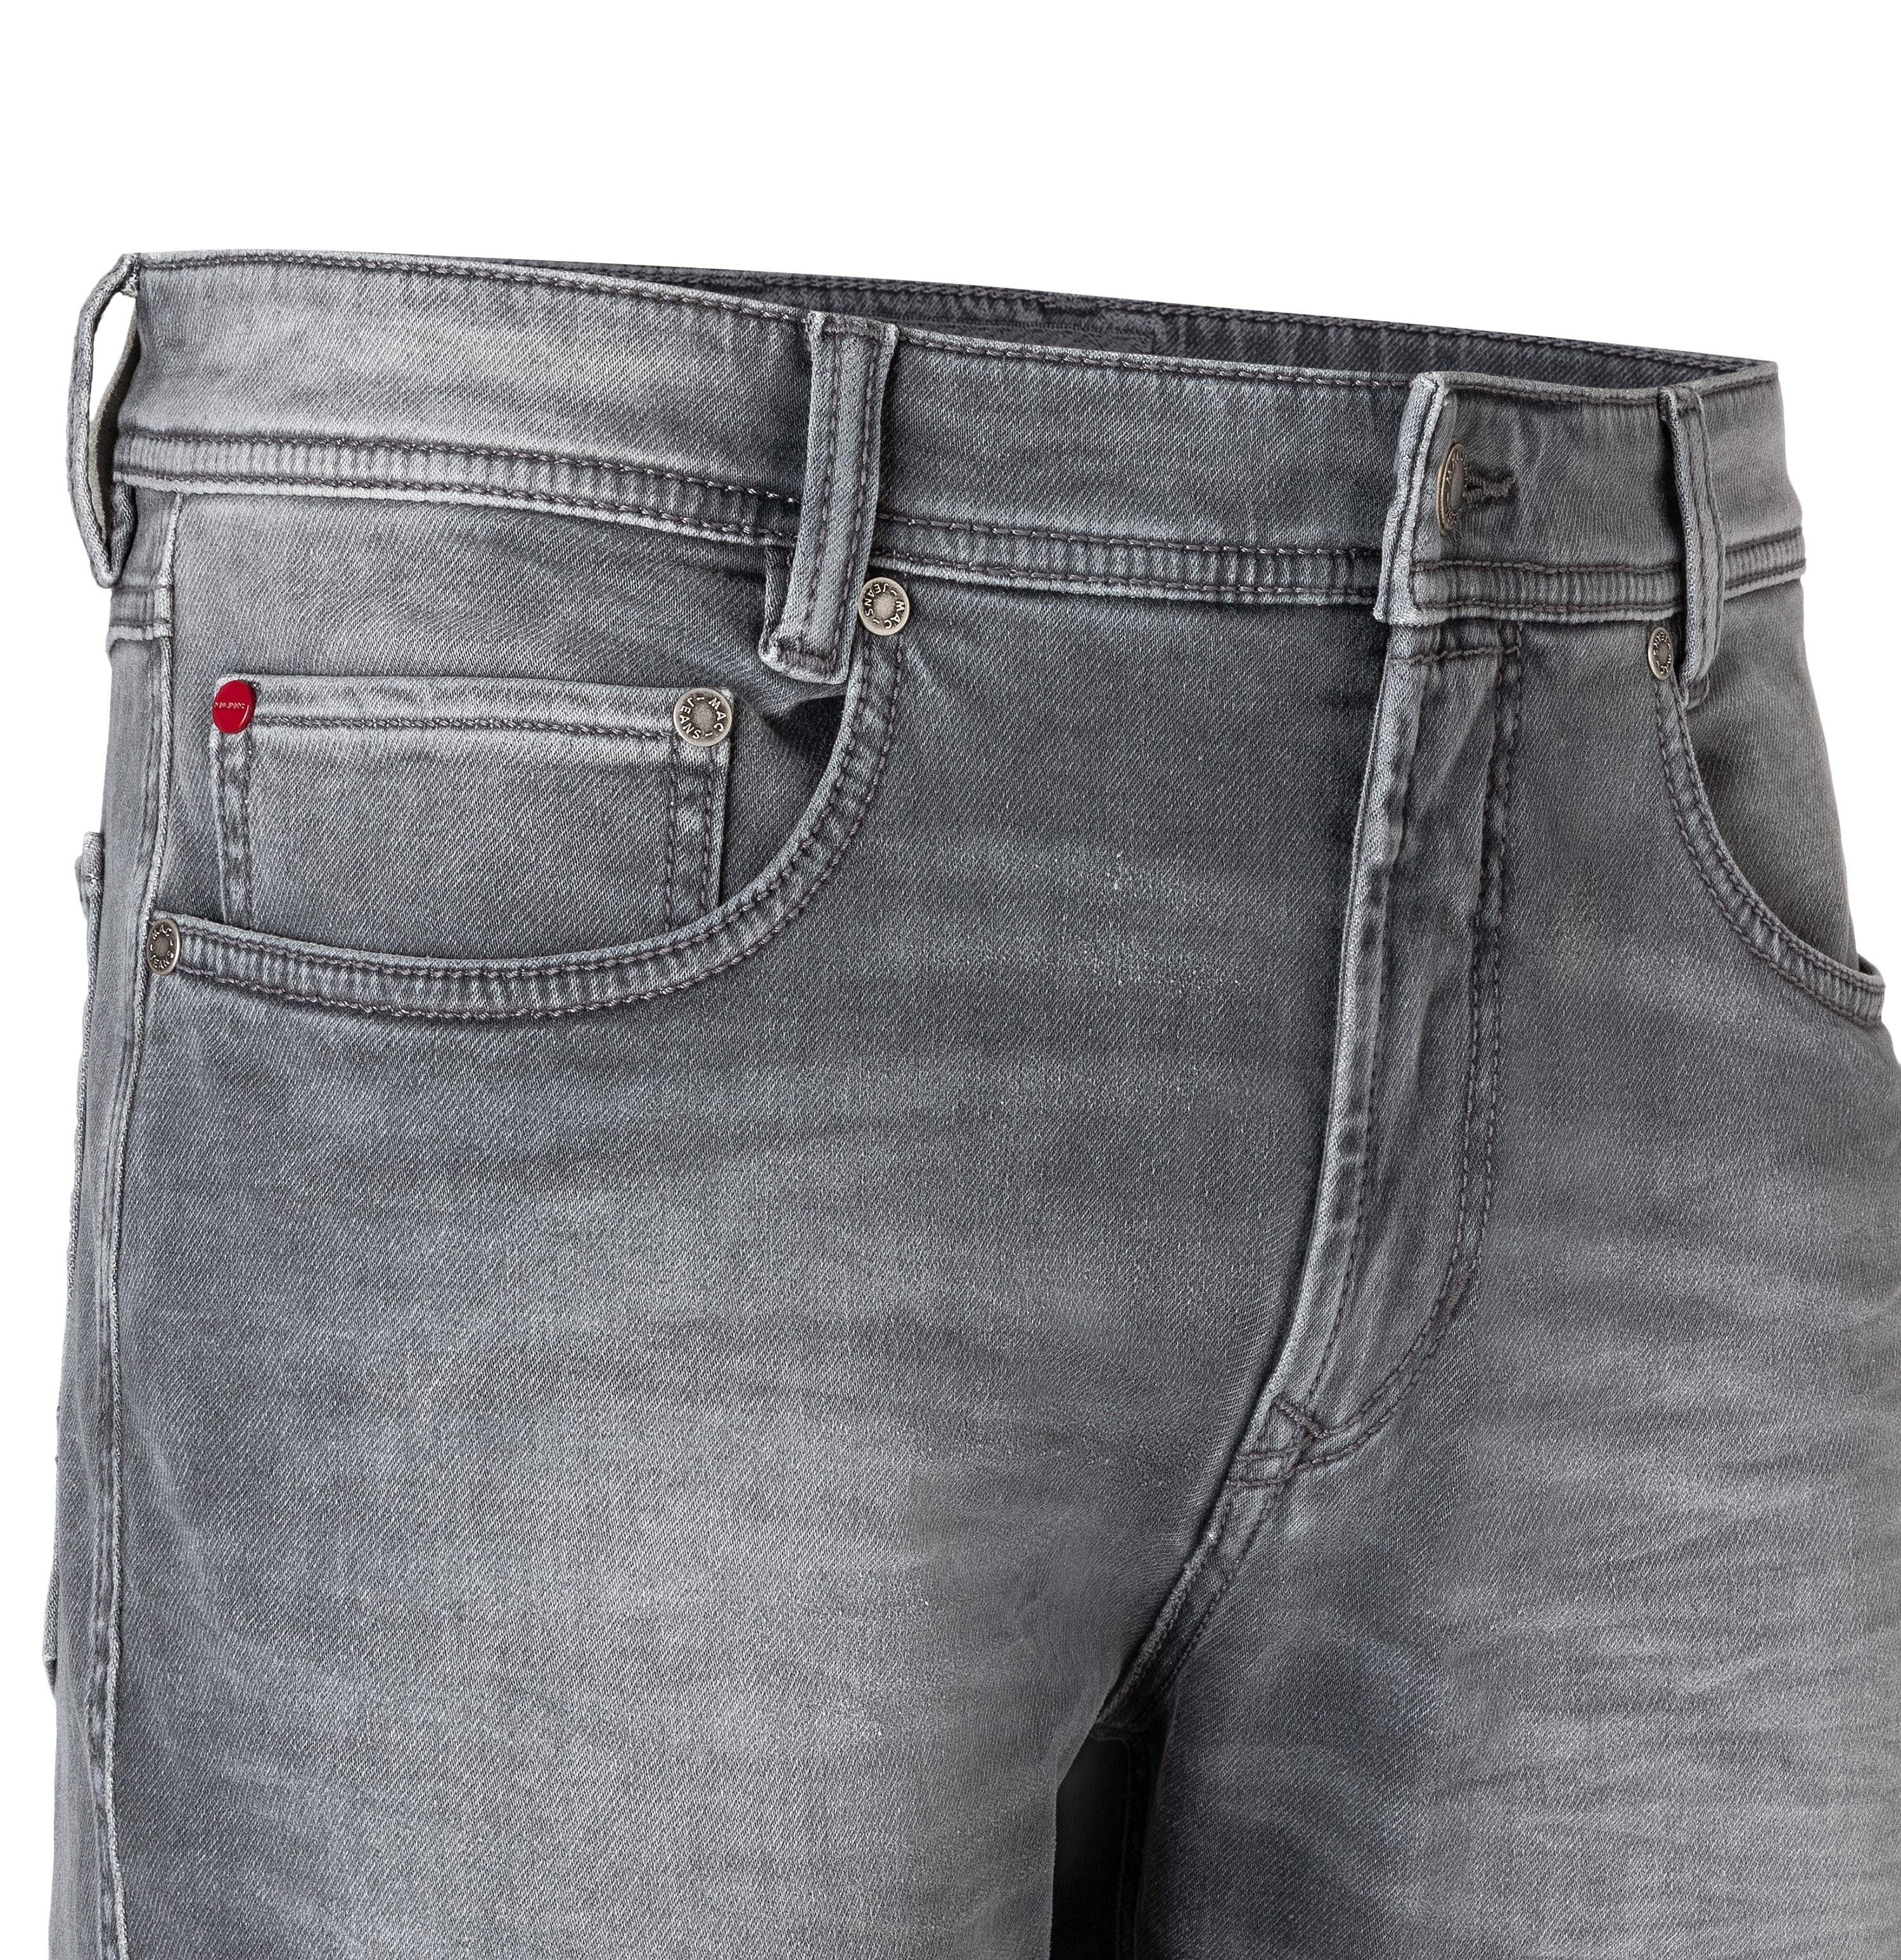 MAC 5-Pocket-Jeans MAC JOG´N JEANS H858 authentic midgrey wash 0590-00-0994L